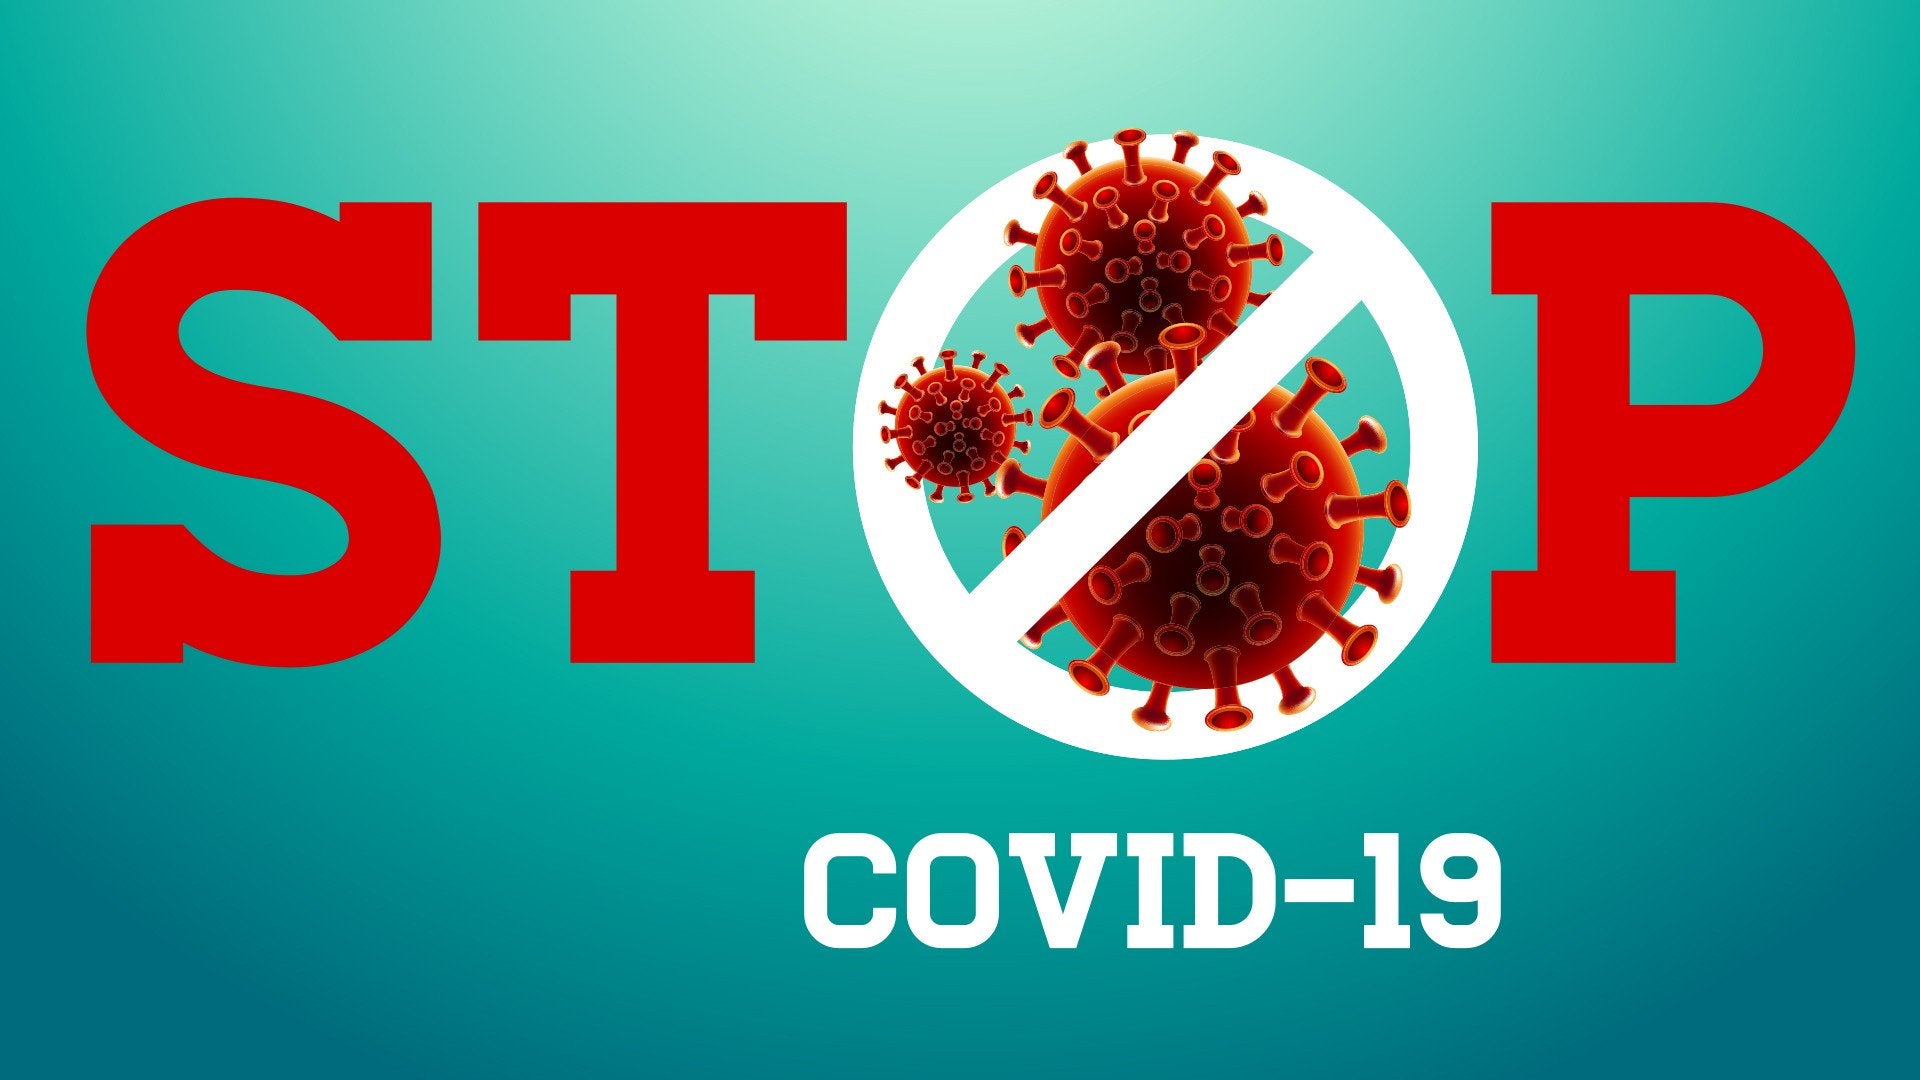 Help Stop COVID-19 - Take Measures Against the New Coronavirus